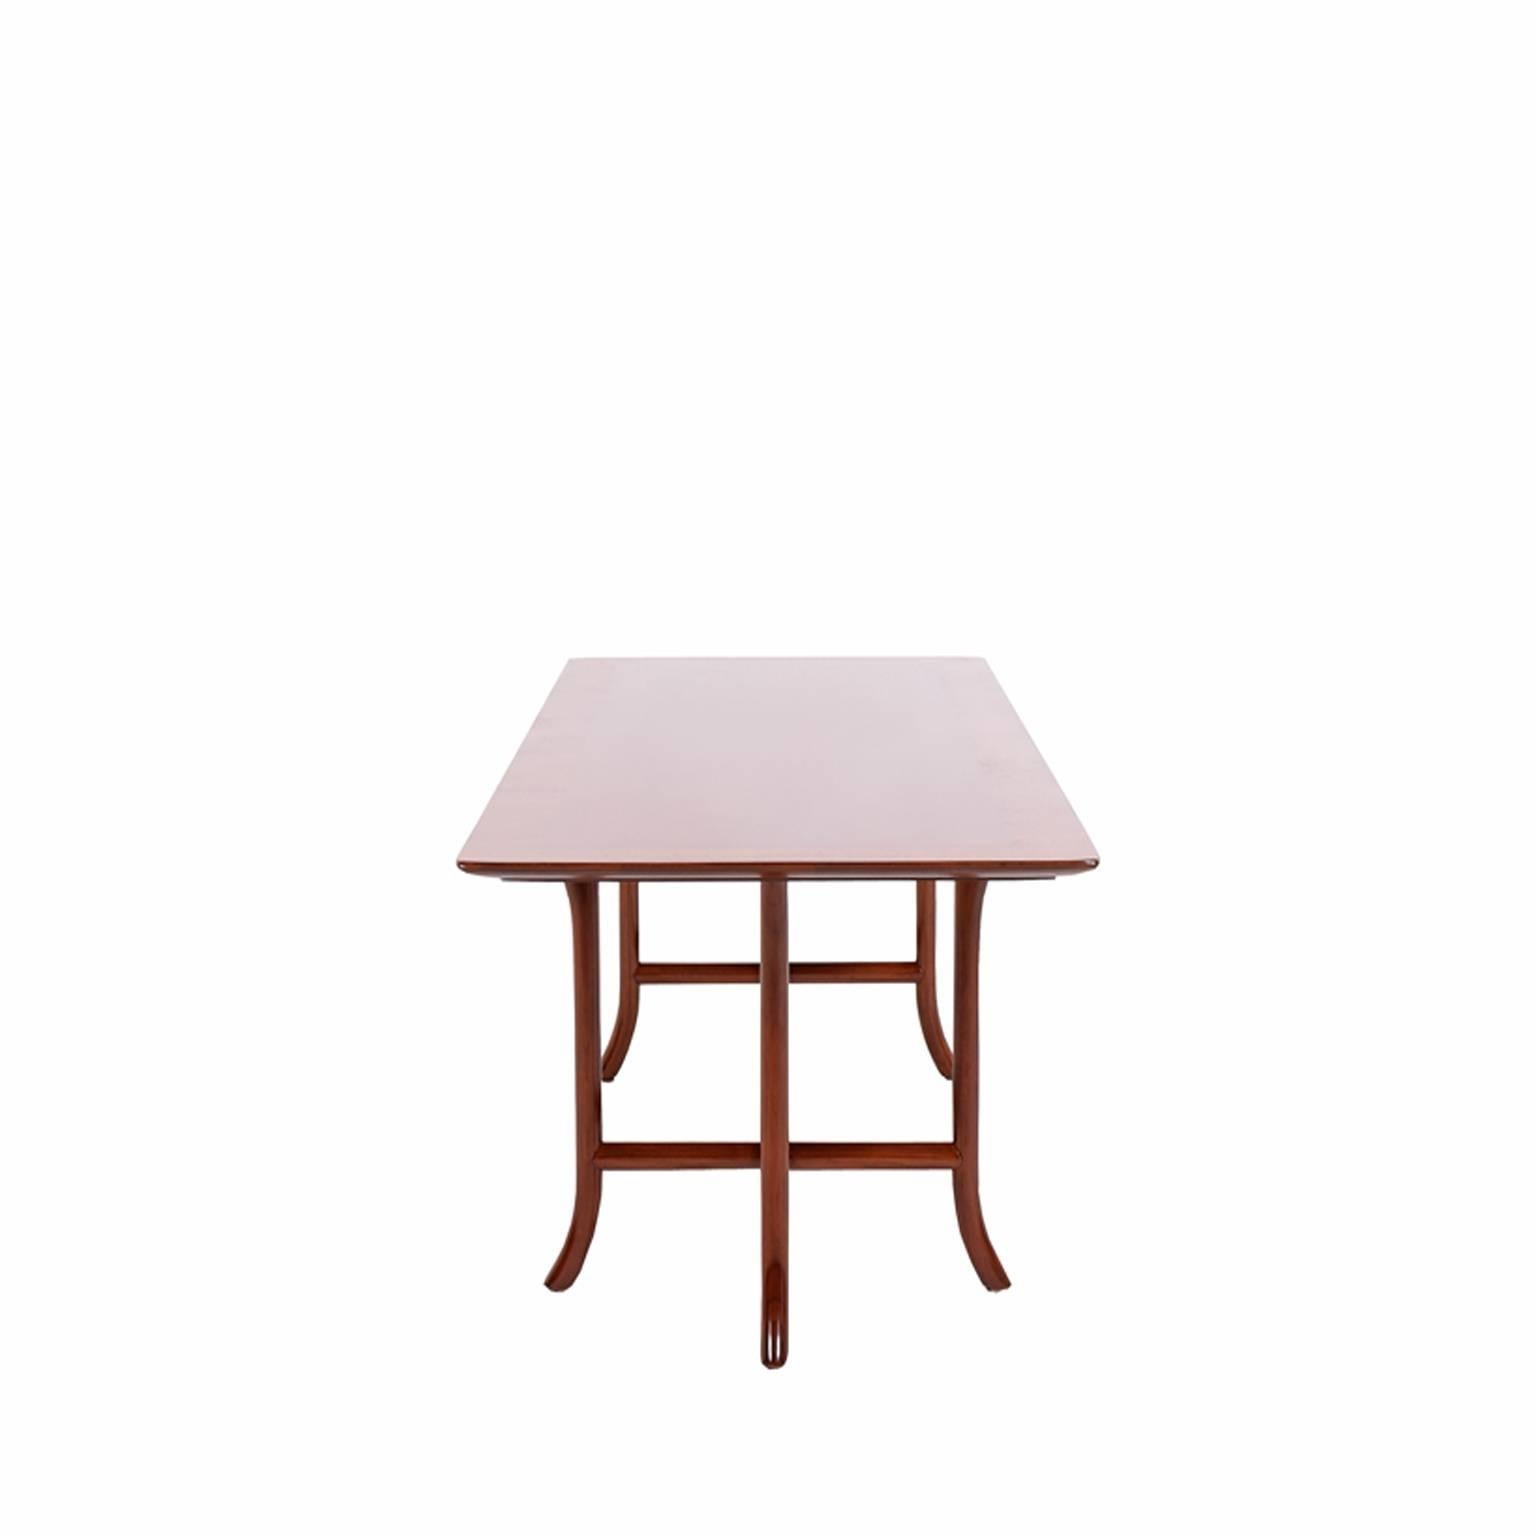 Mid-Century Modern Coffee Table by T.H. Robsjohn-Gibbings for Widdicomb